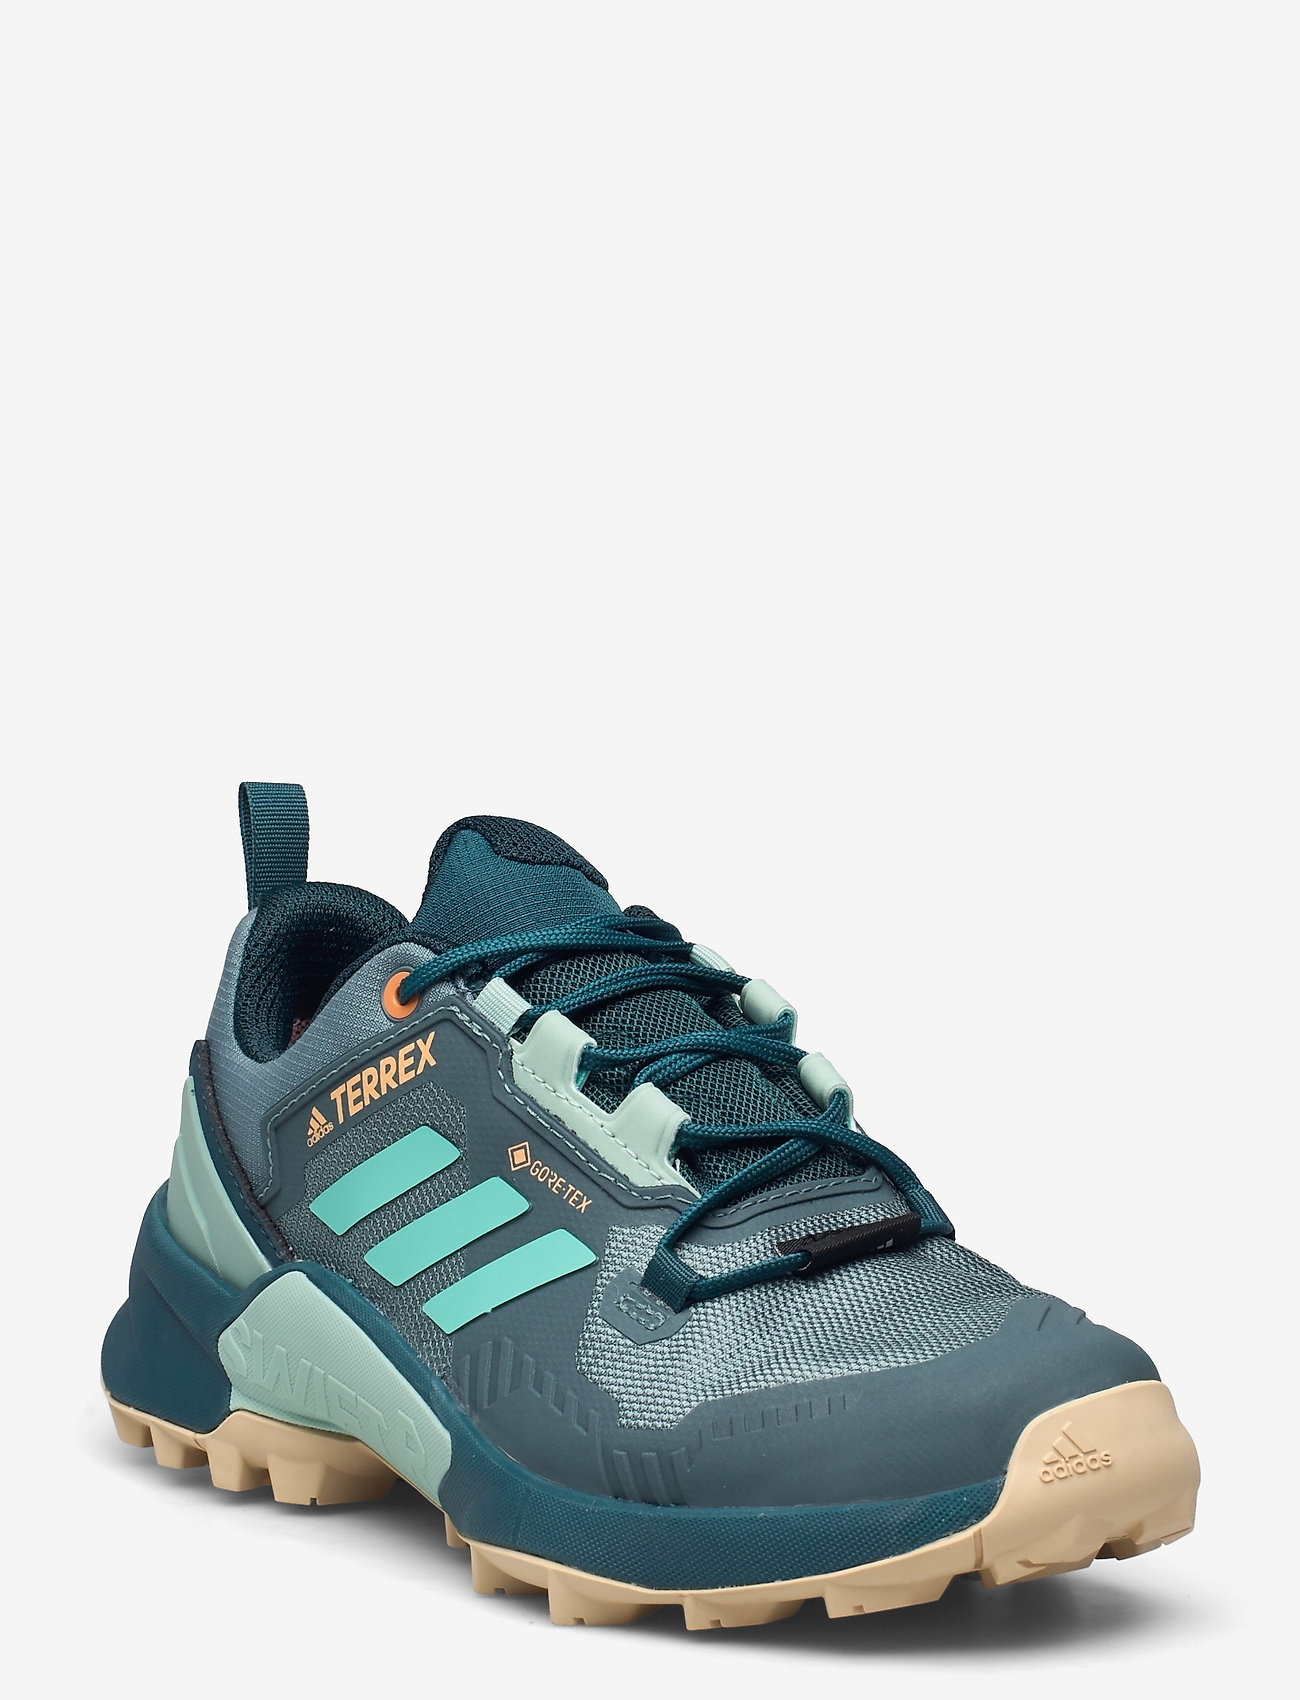 adidas zx gtx trail boots